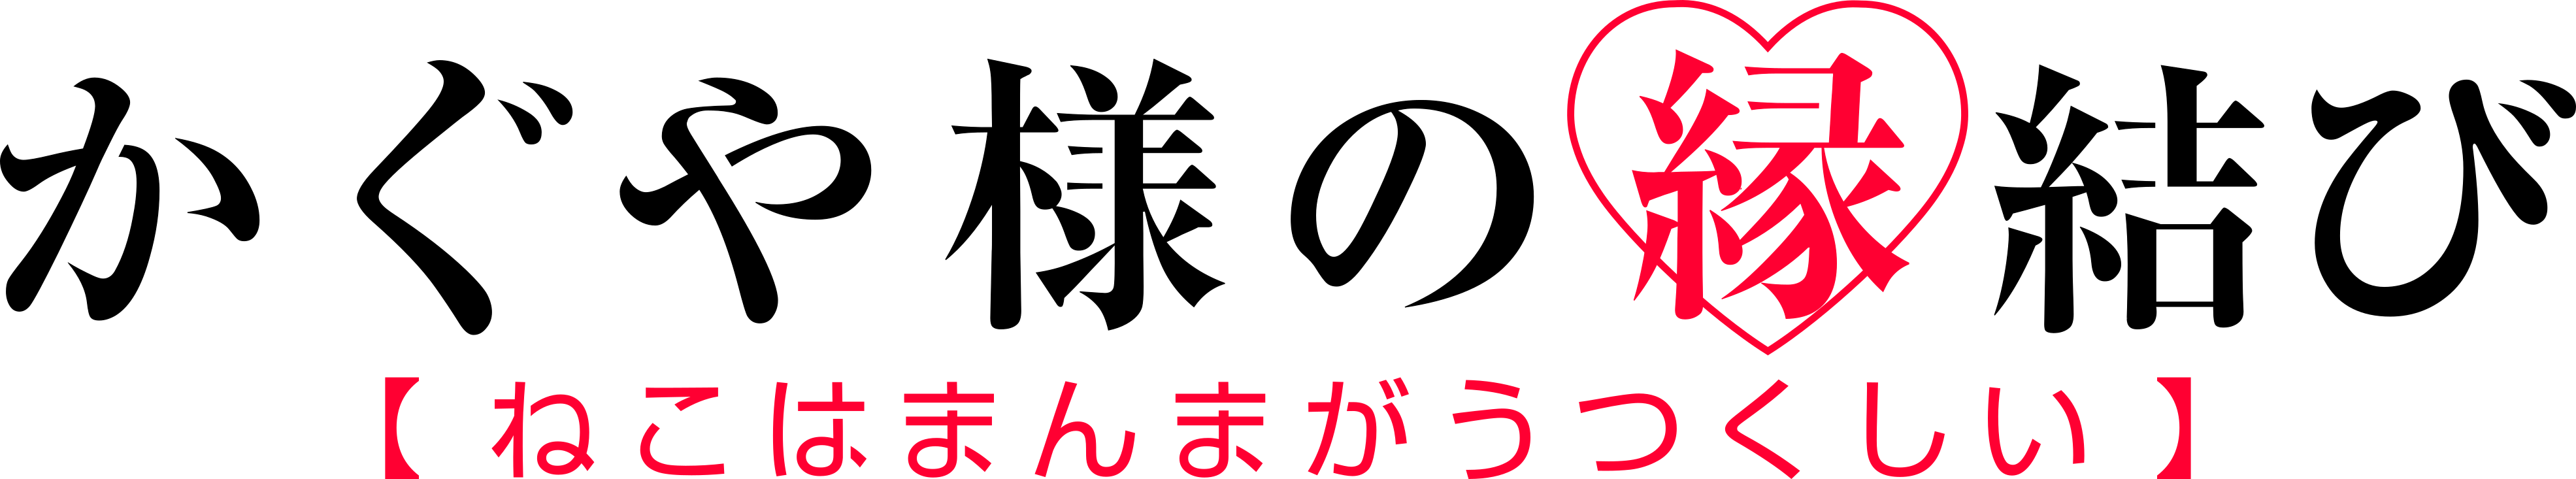 File:Kaguya-sama wa Kokurasetai Ultra Romantic logo.svg - Wikimedia Commons